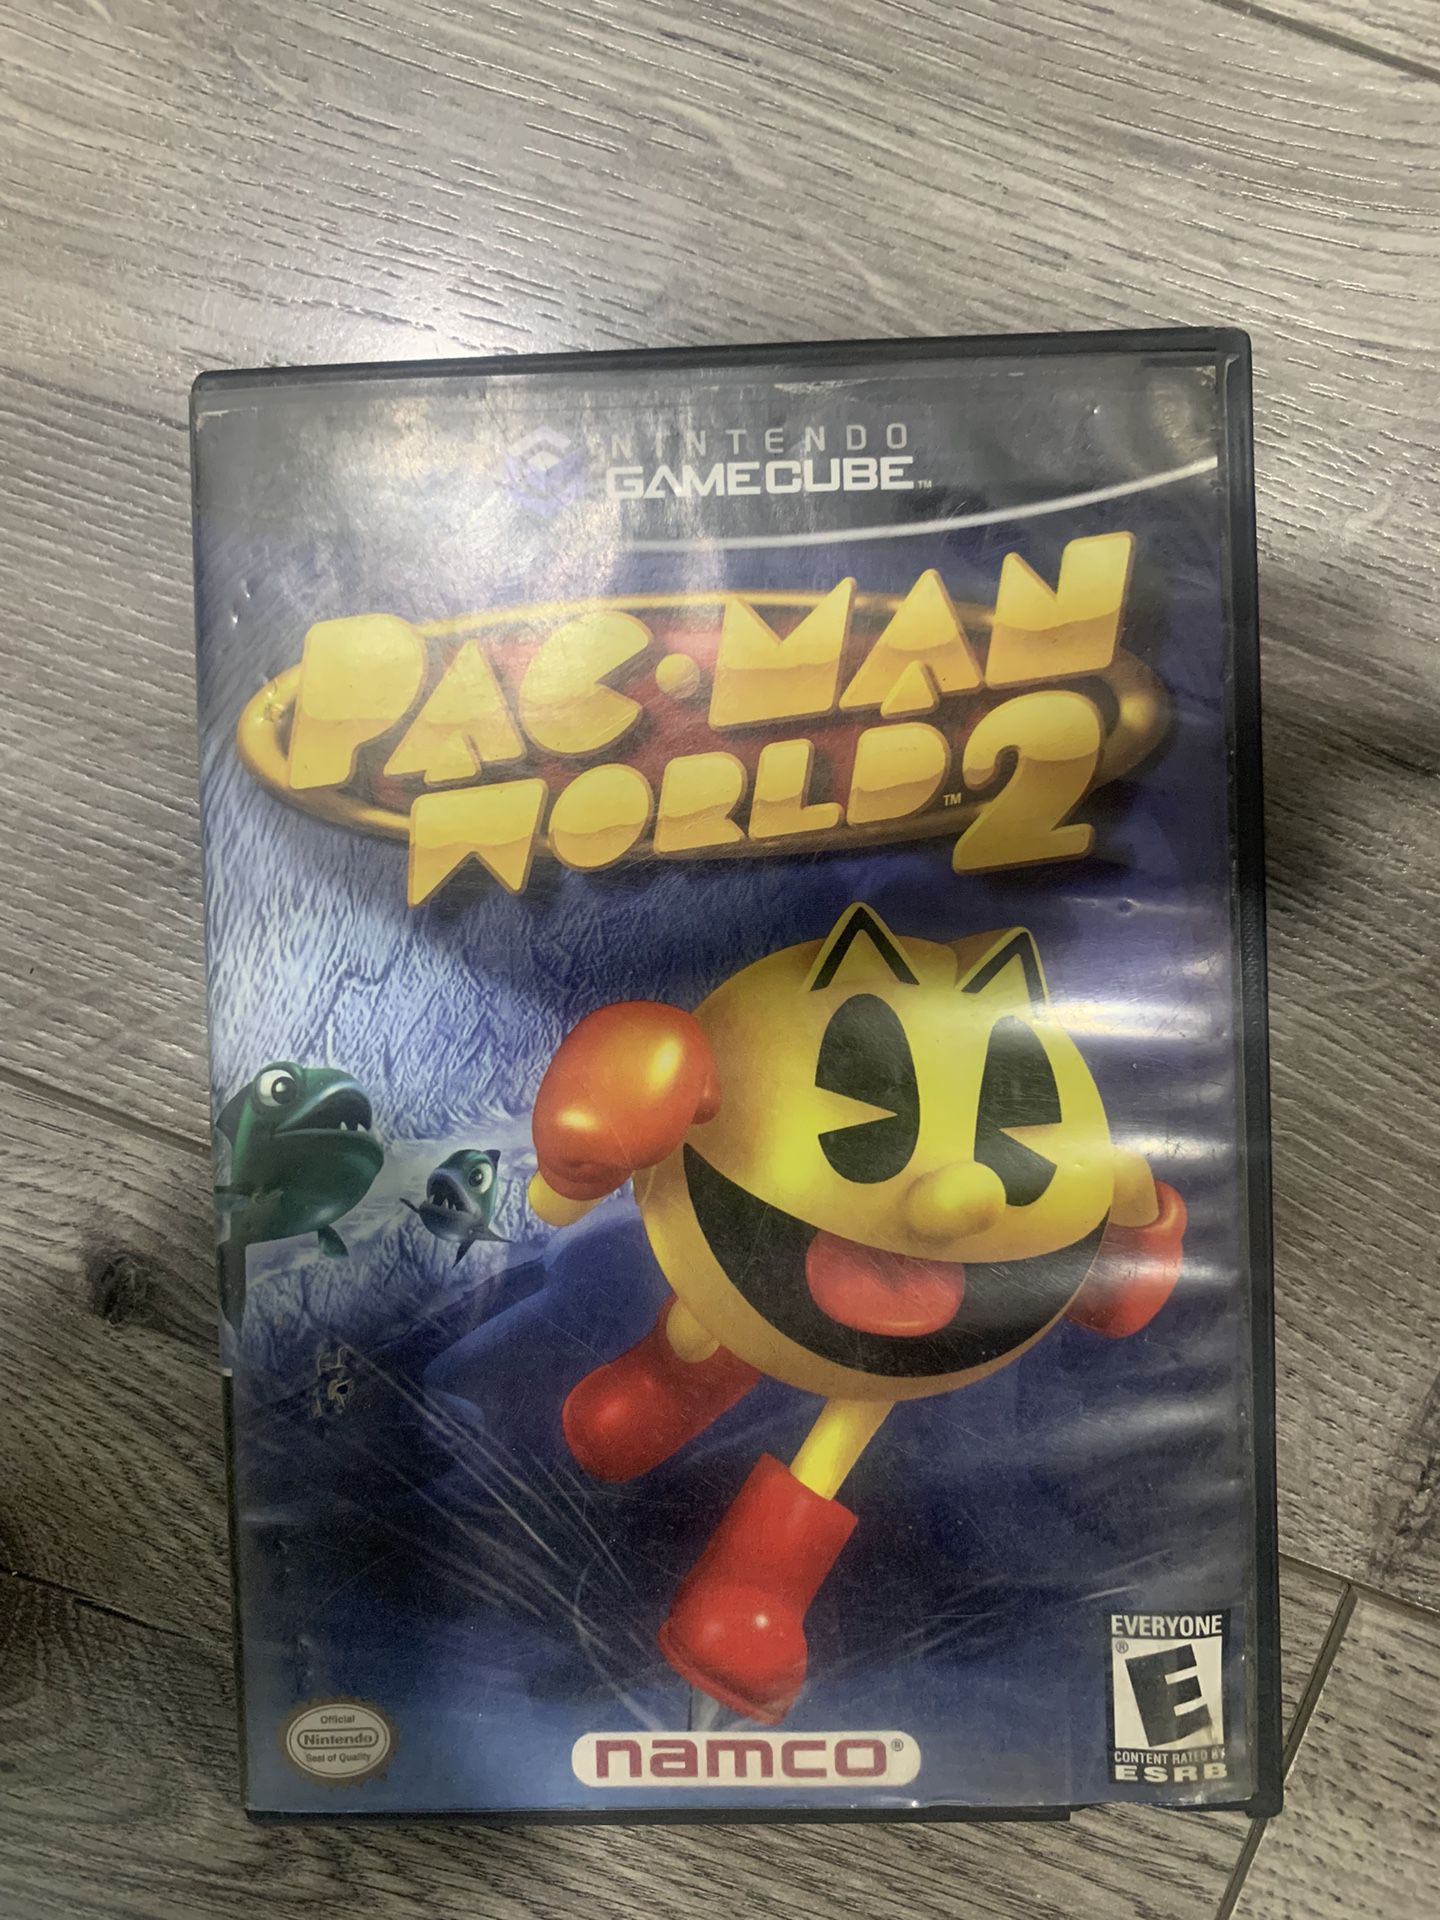 Pacman World 2 For Nintendo GameCube 